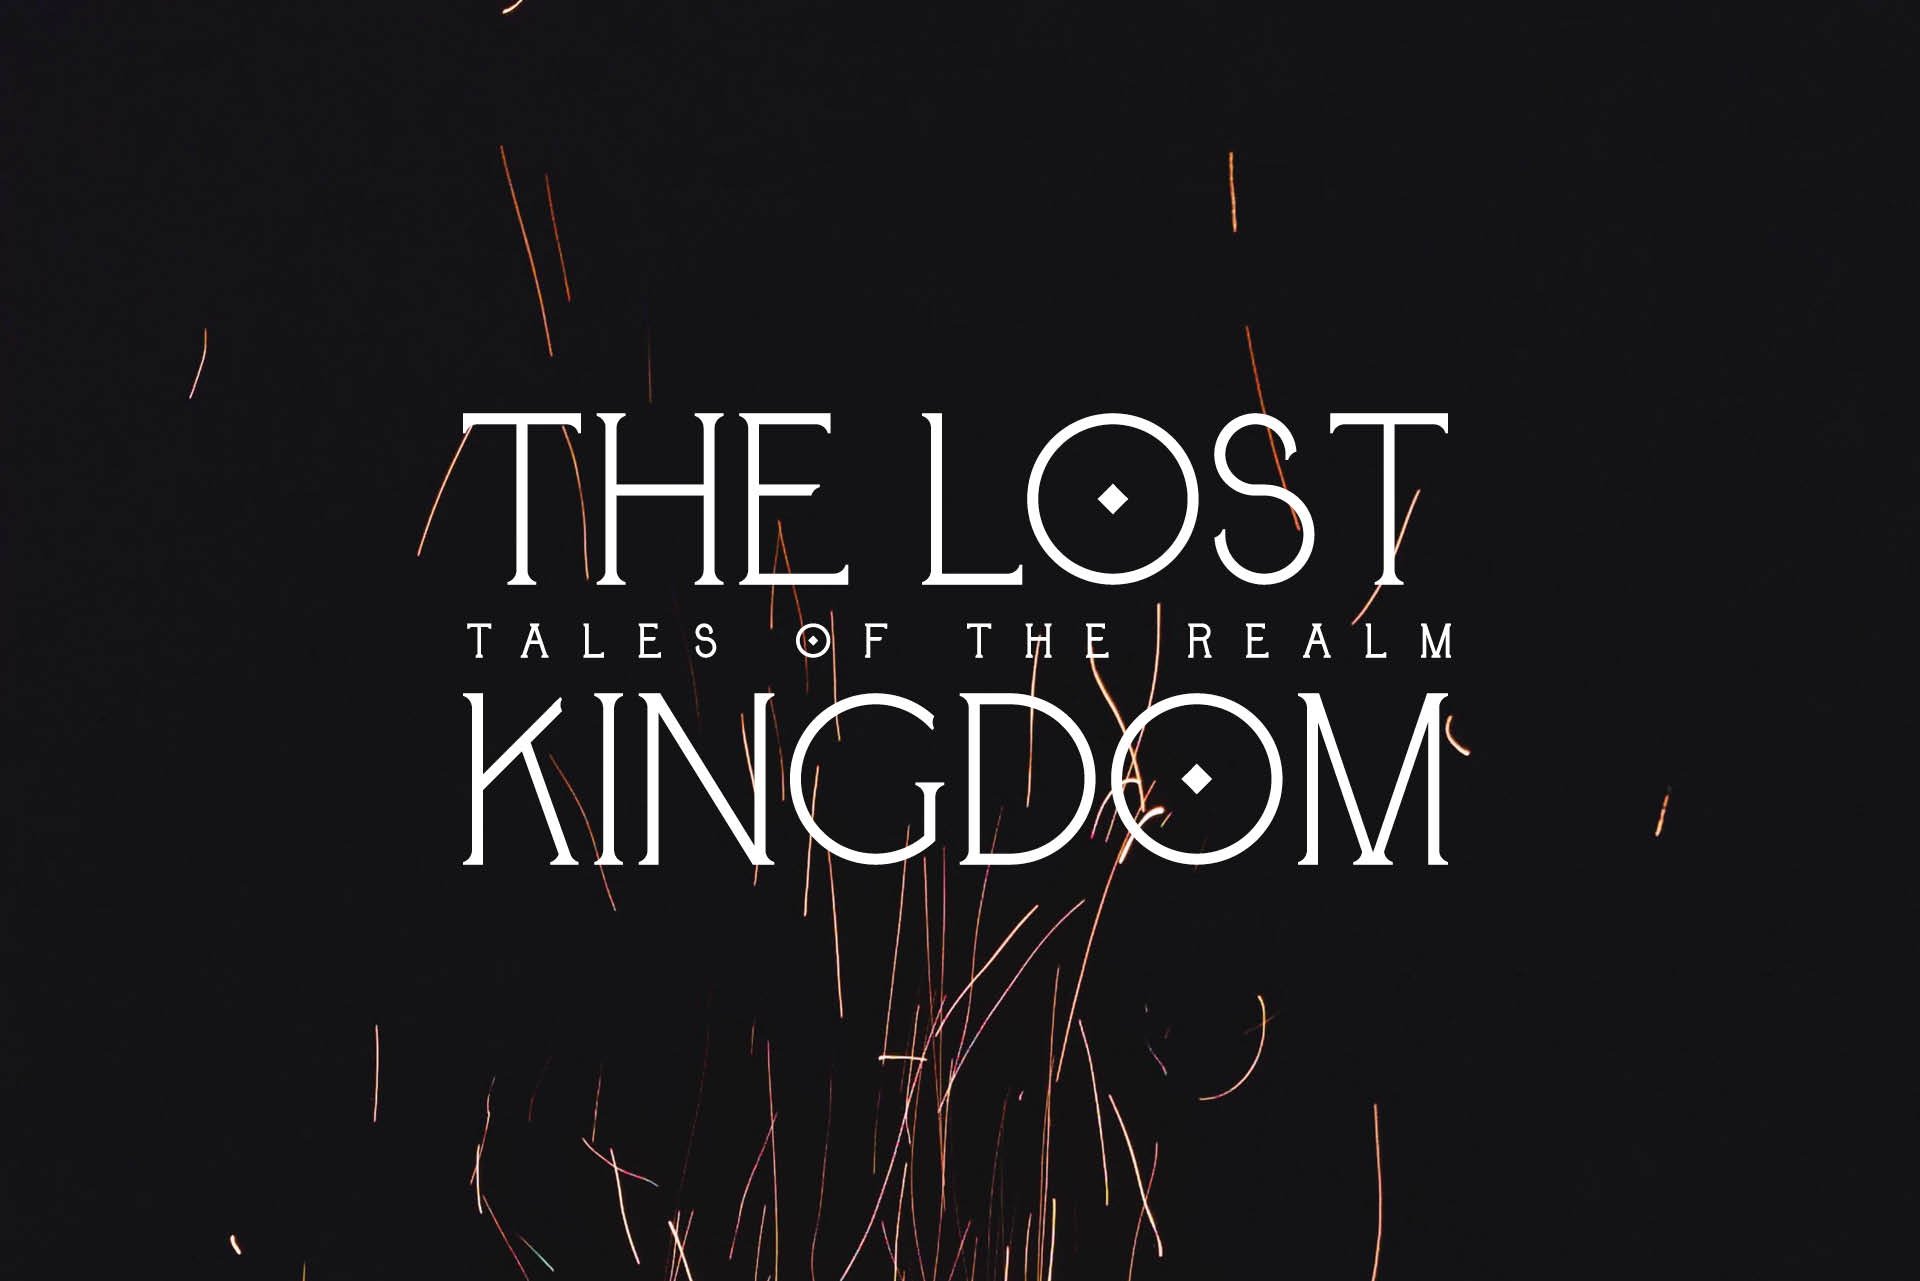 Kingdom Typeface cover image.